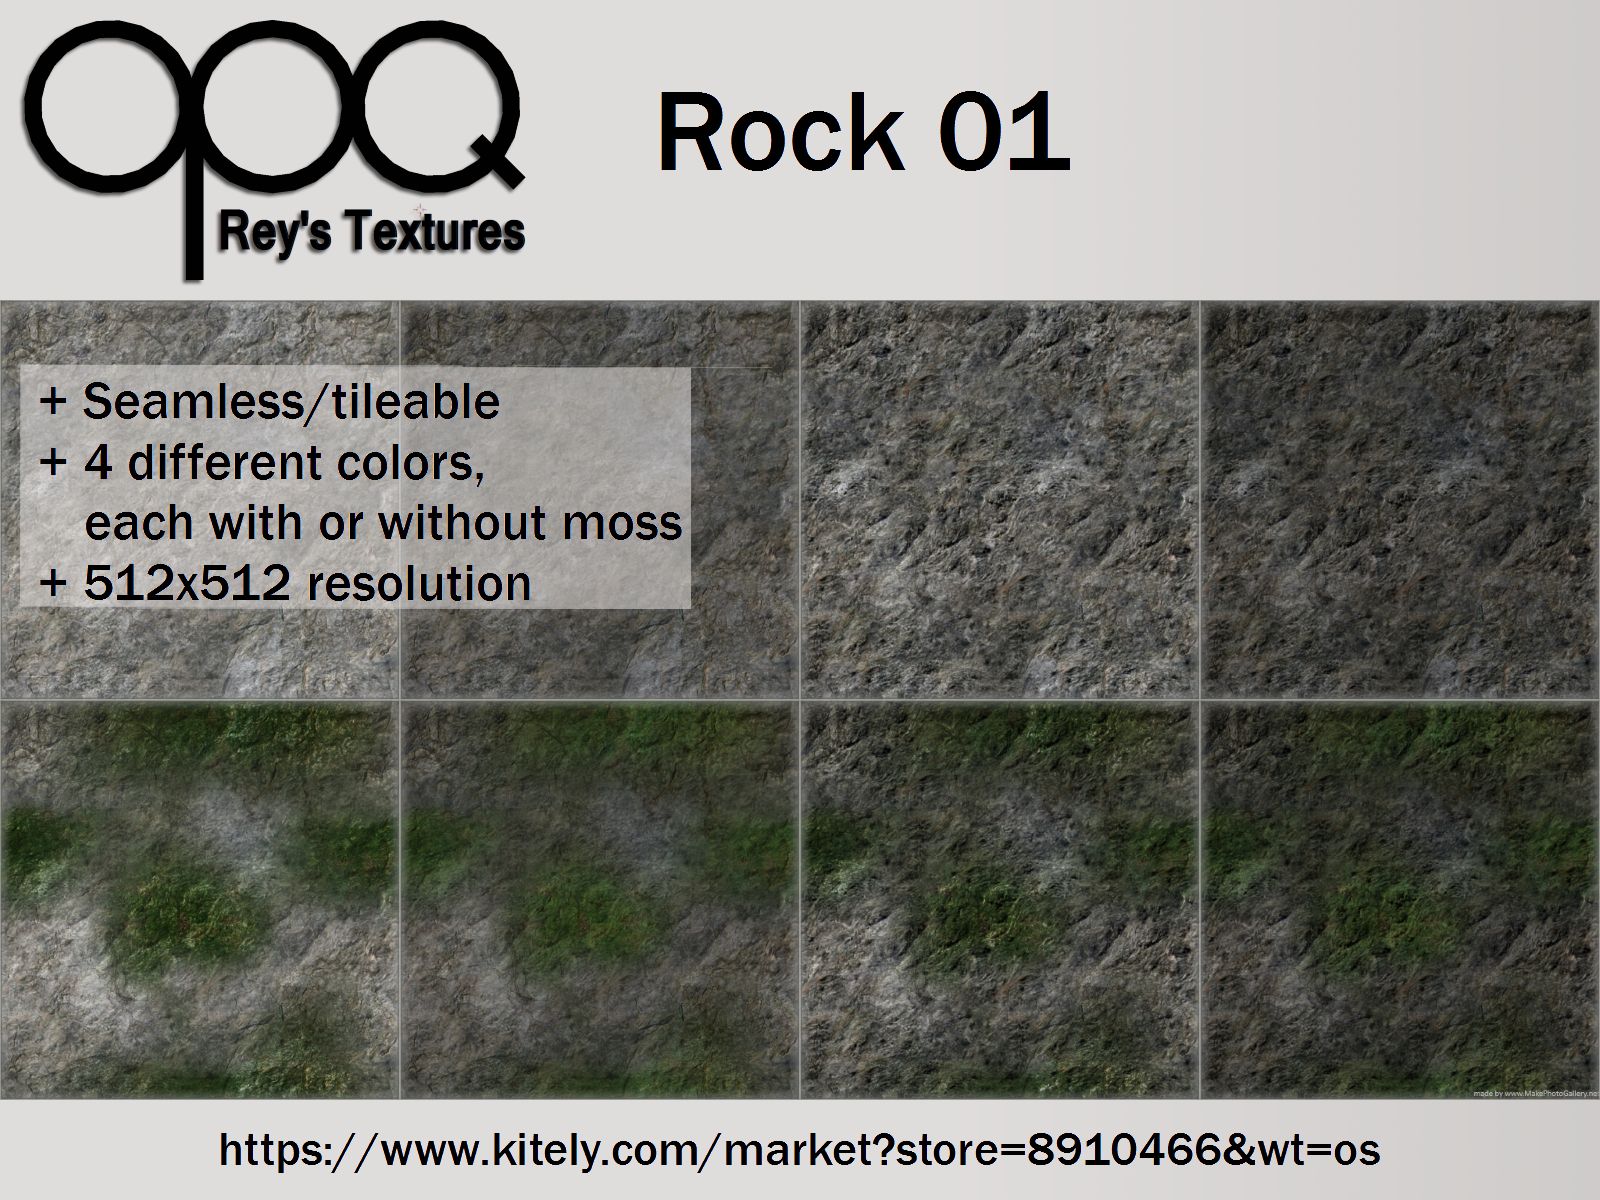 Rey's Rock 01 Poster Kitely.jpg